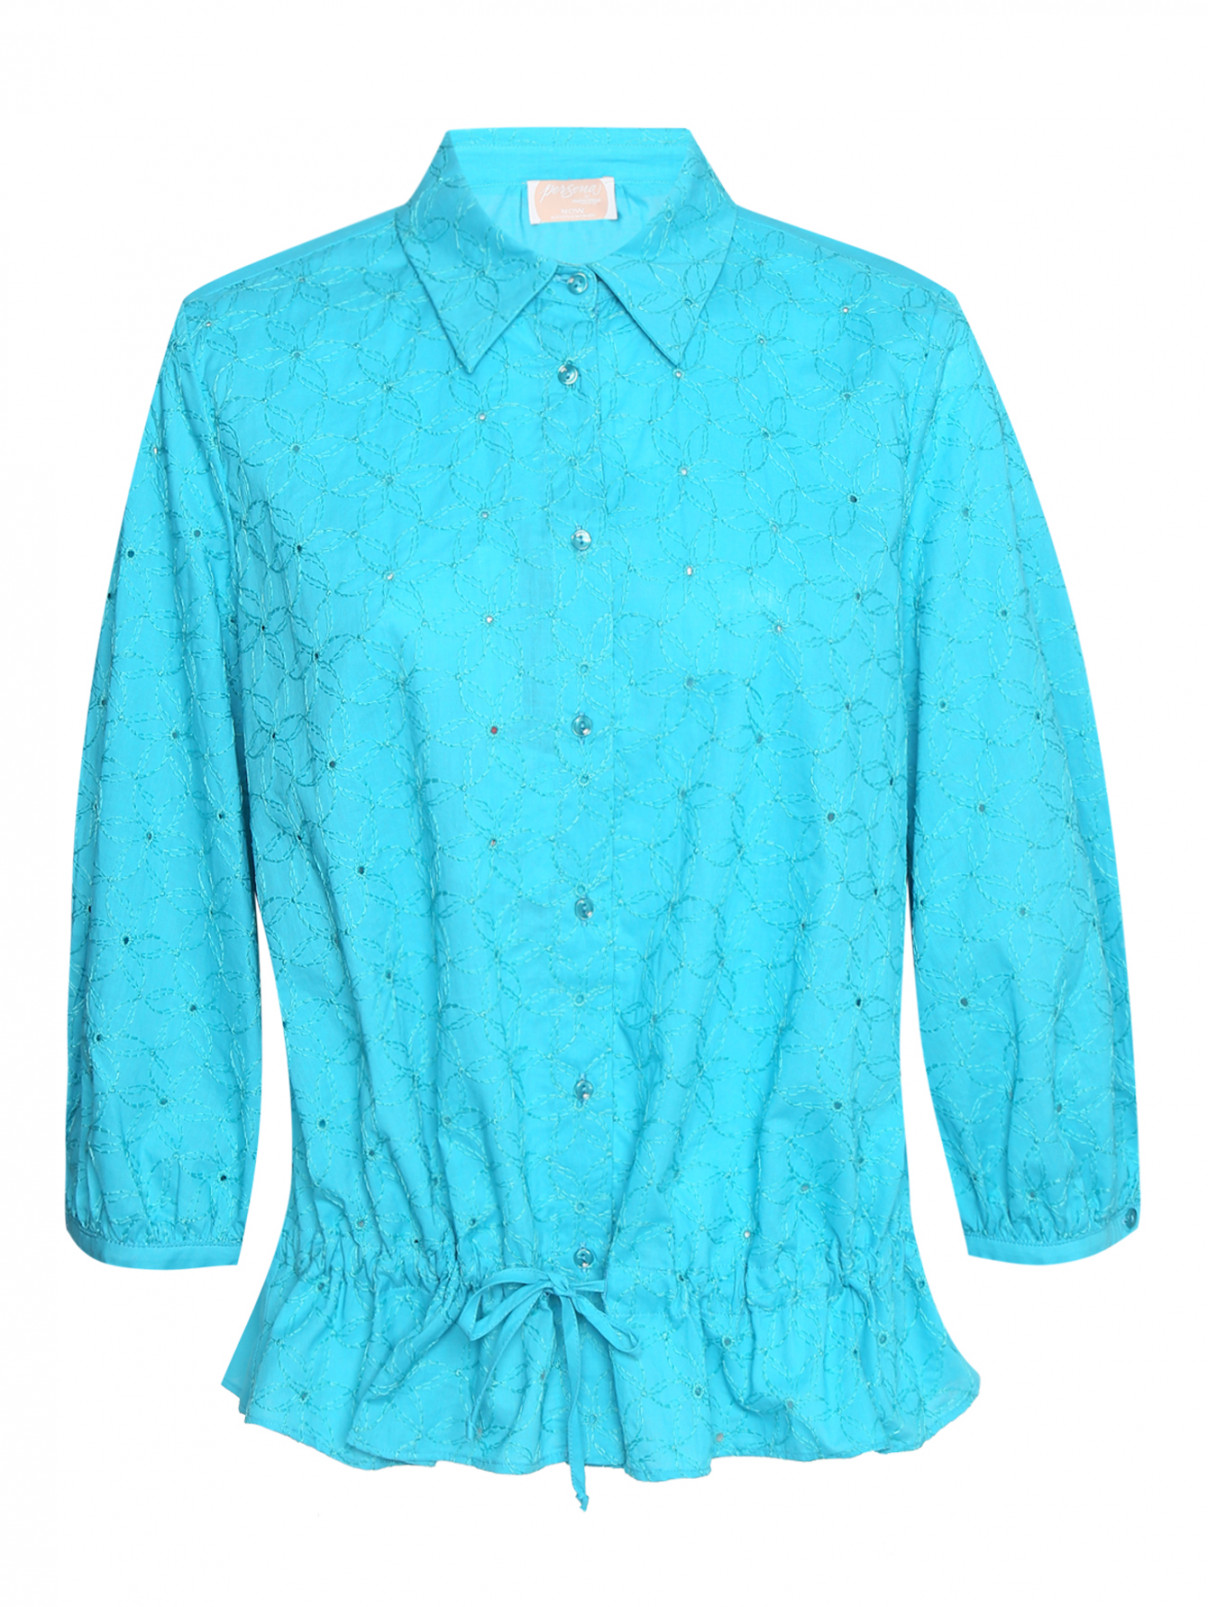 Блуза с вышивкой и завязками Persona by Marina Rinaldi  –  Общий вид  – Цвет:  Синий